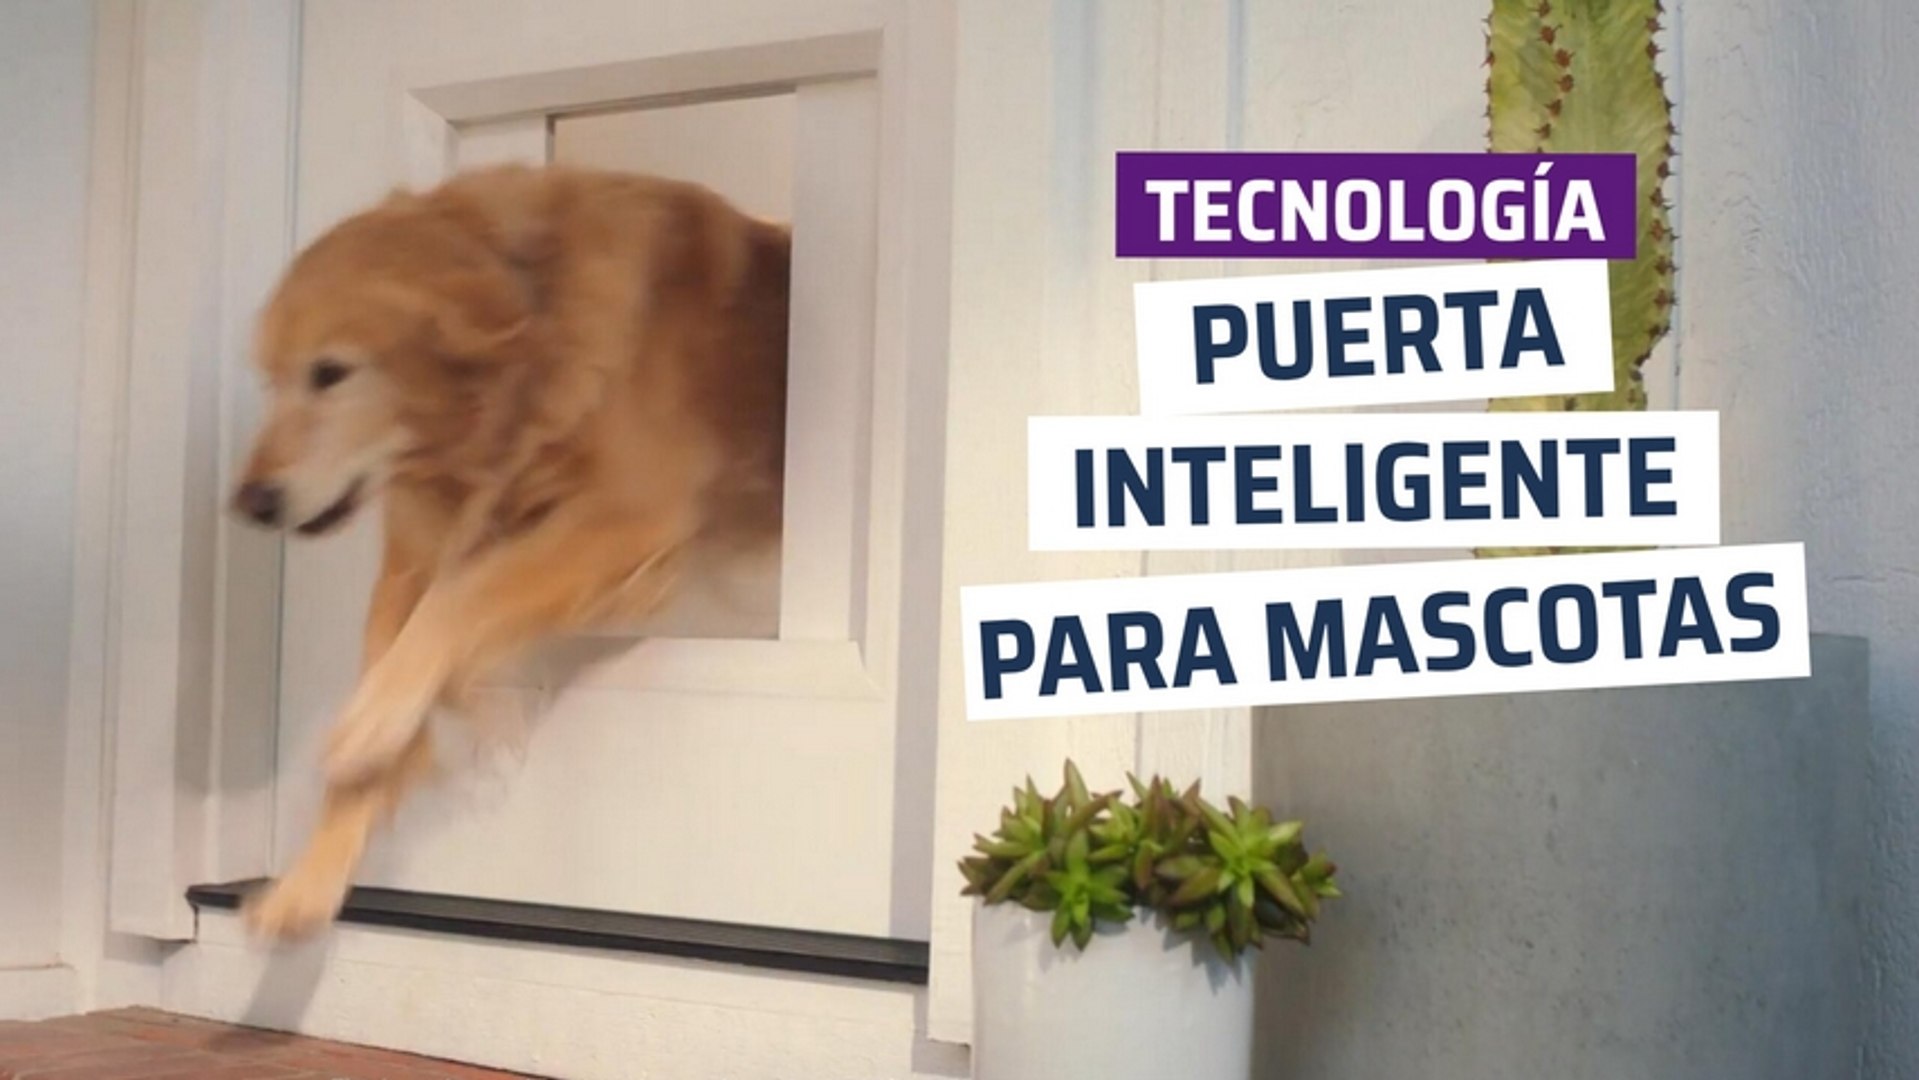 CH] Puerta inteligente para mascotas - Vídeo Dailymotion